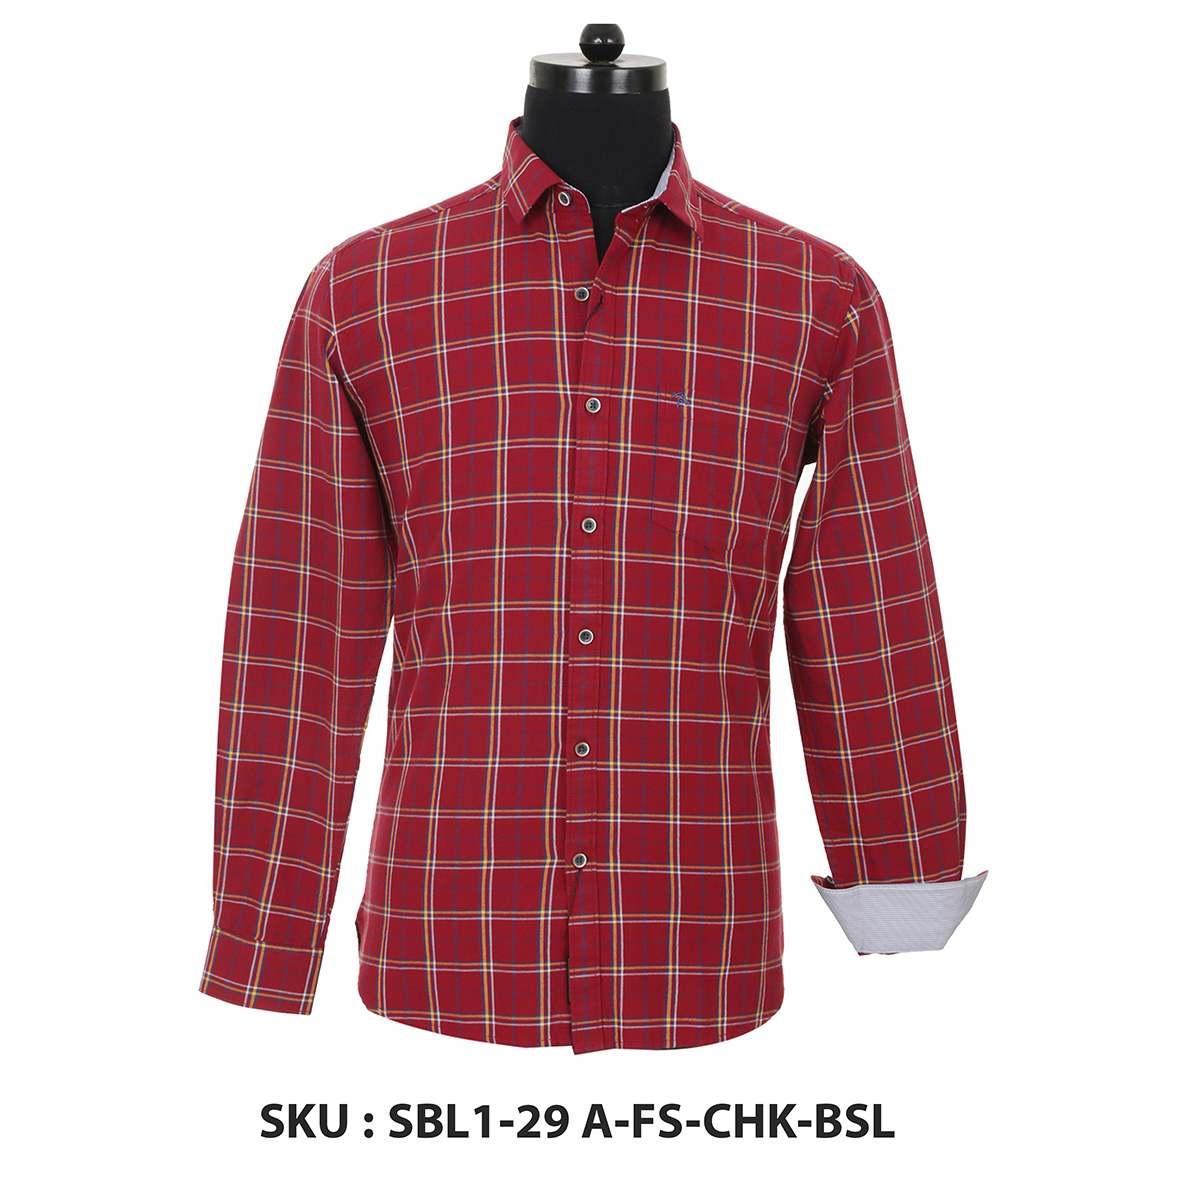 Classic Polo Mens Woven Shirt Sbl1-29 A-Fs-Chk-Bsl Red XL